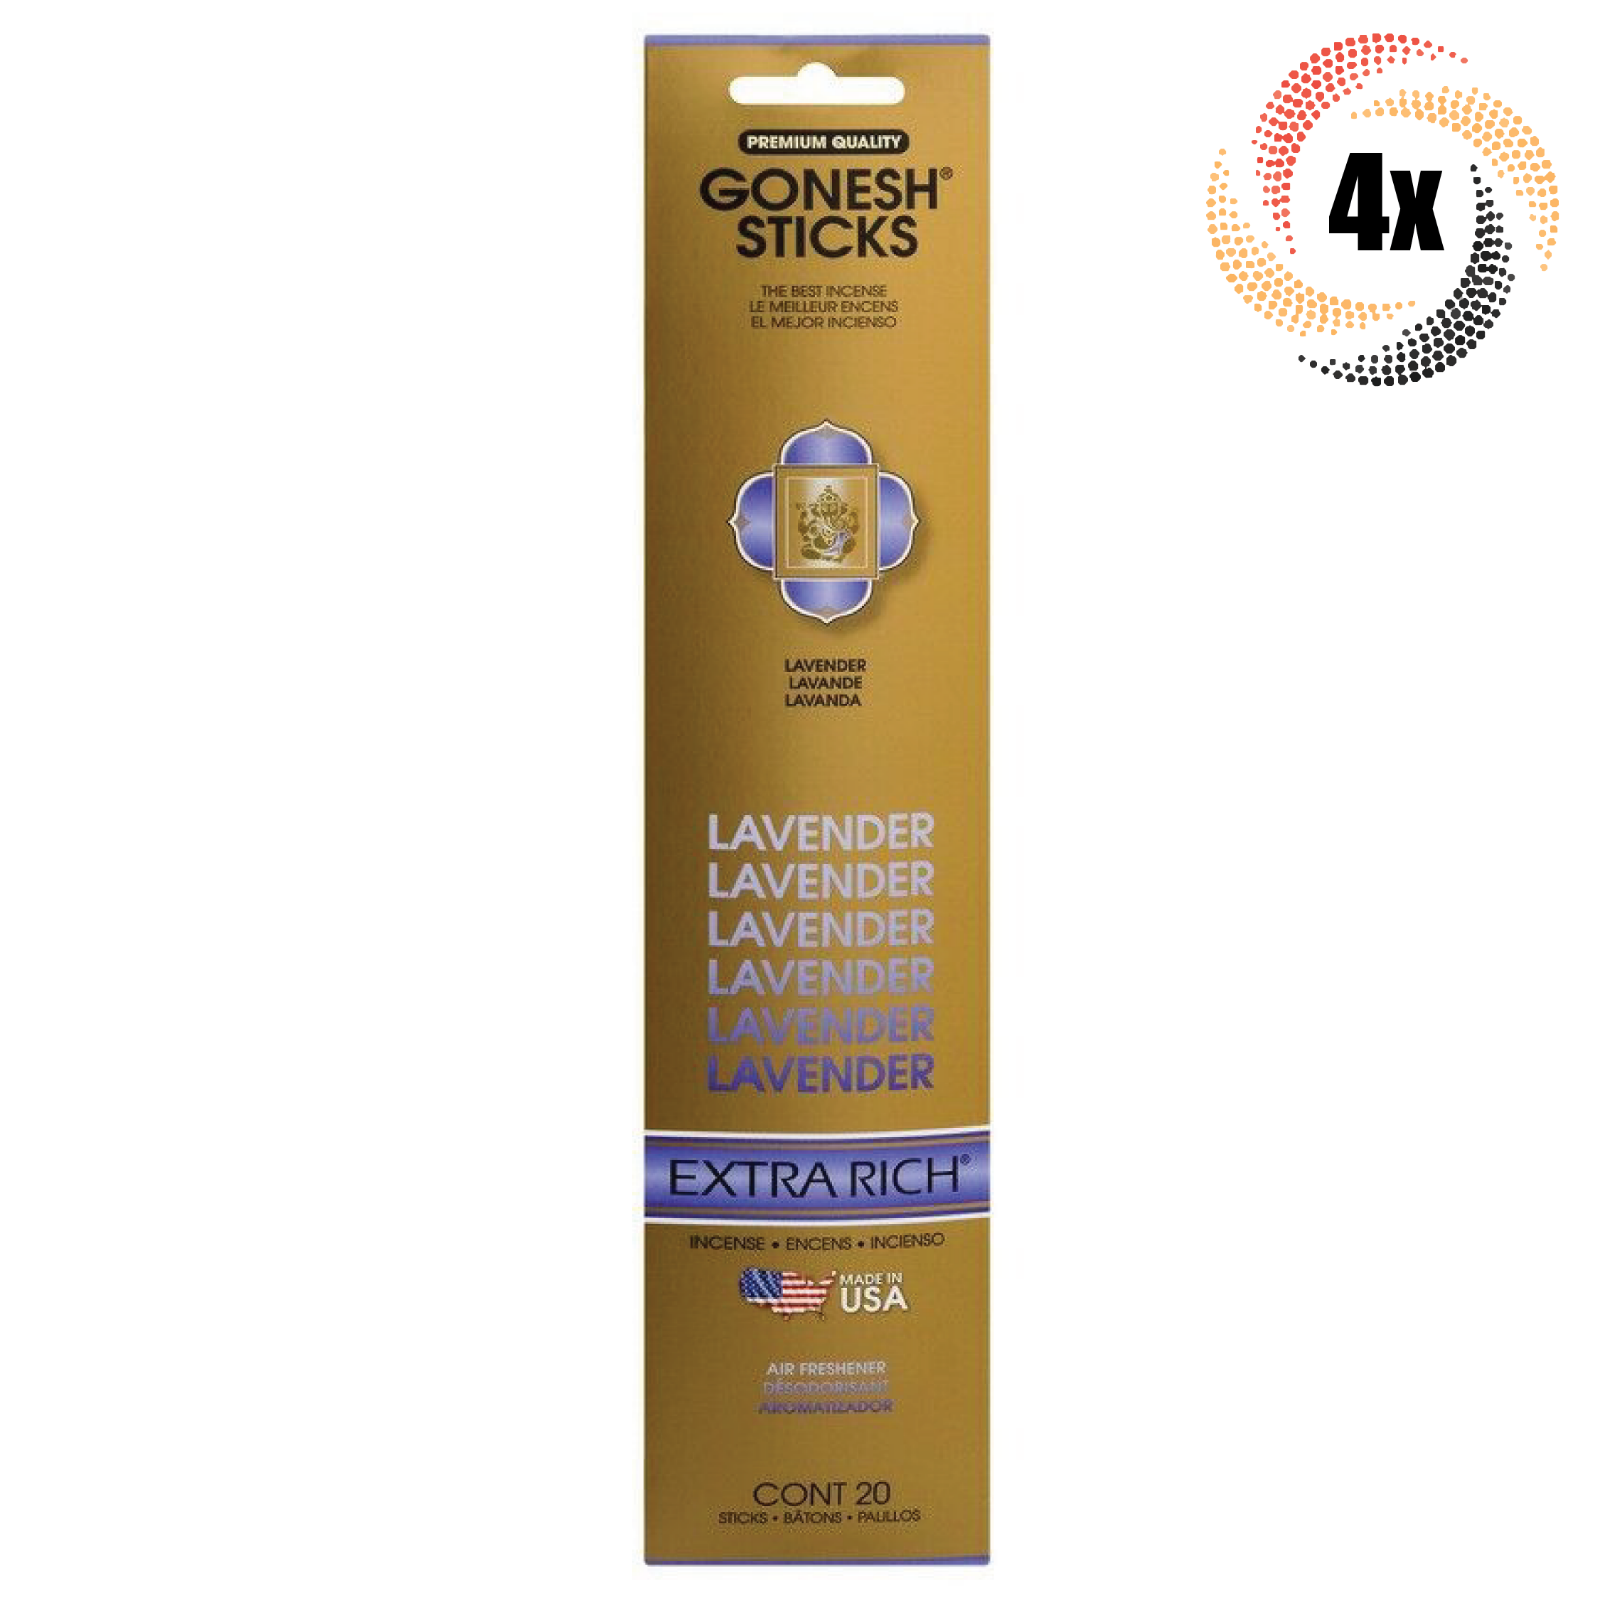 4x Packs Gonesh Extra Rich Incense Sticks Lavender Scent | 20 Sticks Each - $11.49